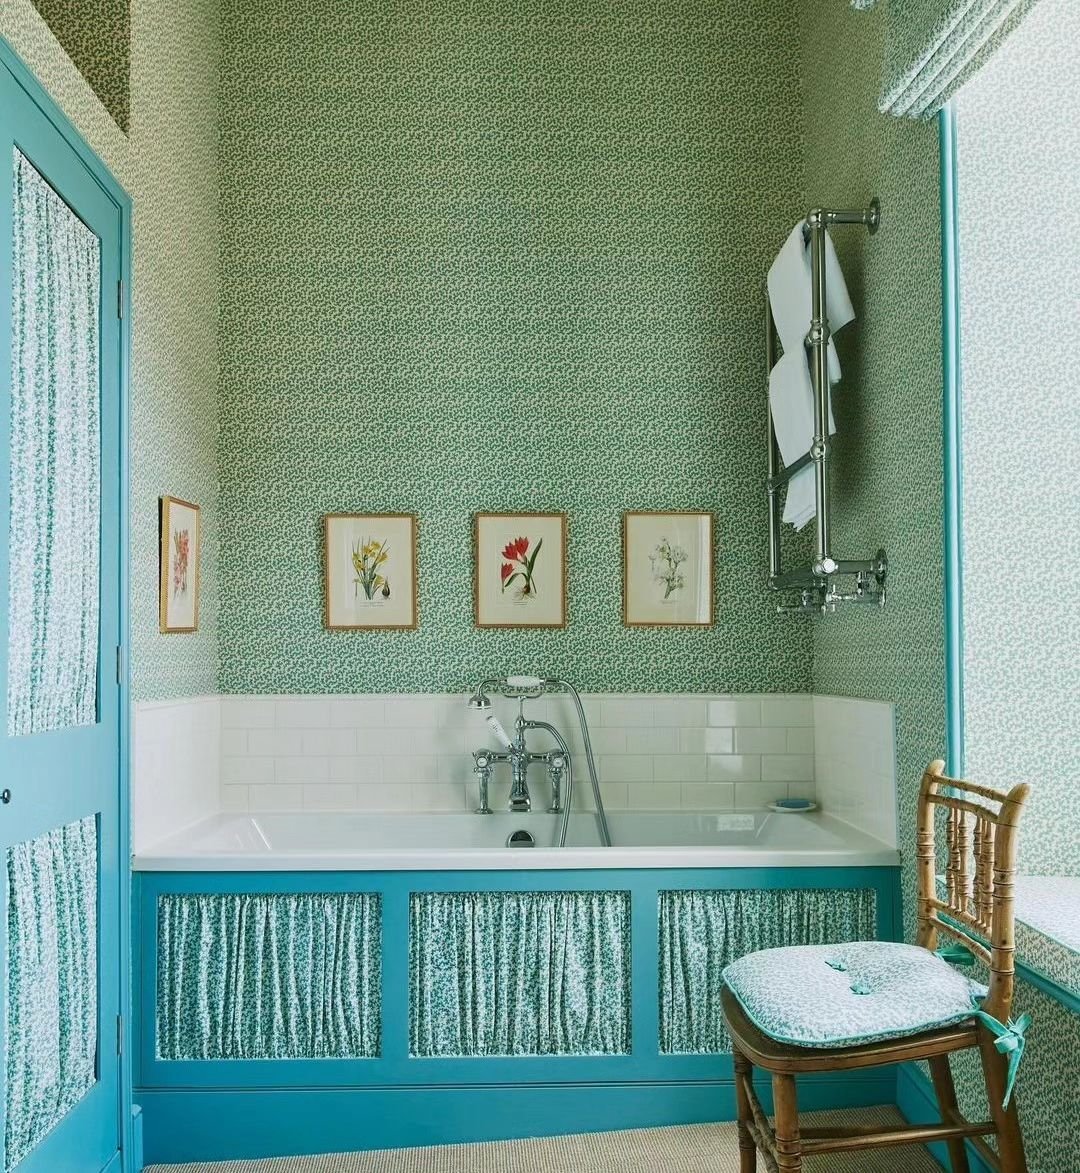 More is definitely more in this fabulous bathroom designed by @carlosgarciainteriors. 🩵💚

#bathroomdecor #bathroominspiration #sibylcolefaxandjohnfowler #squiggle #greenandturquoise #carlosgarciainteriors #romanblinds #fabricbathpanel #wallpaperedb